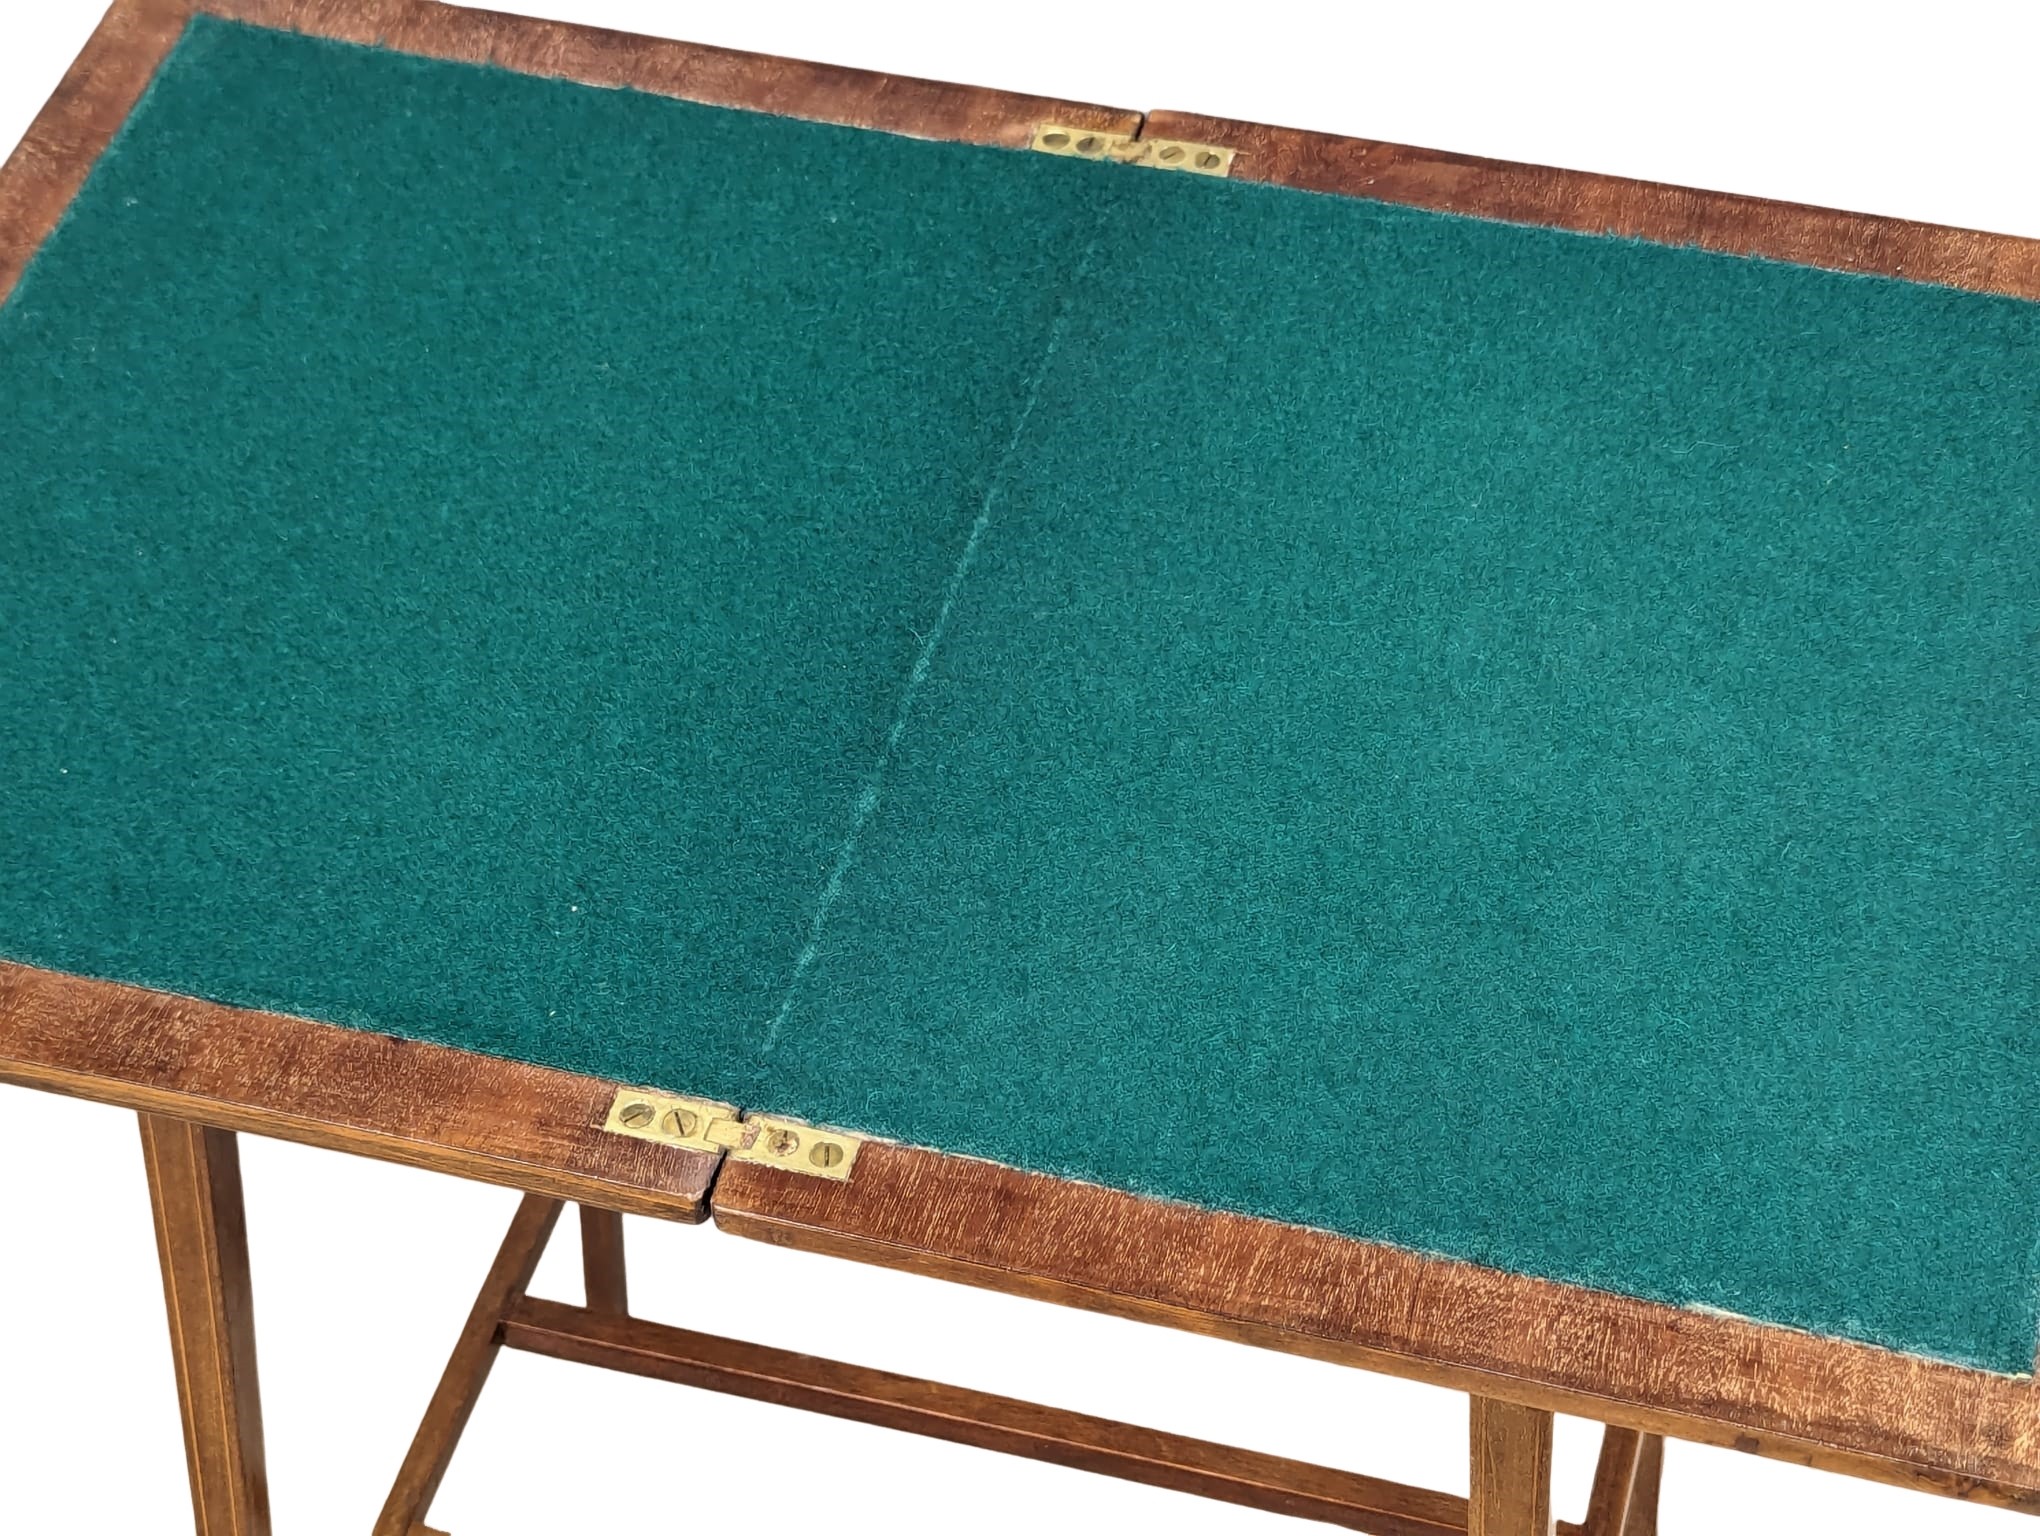 A Sheraton Revival inlaid mahogany turnover games table. Circa 1900. 46x35x73.5cm - Image 4 of 4